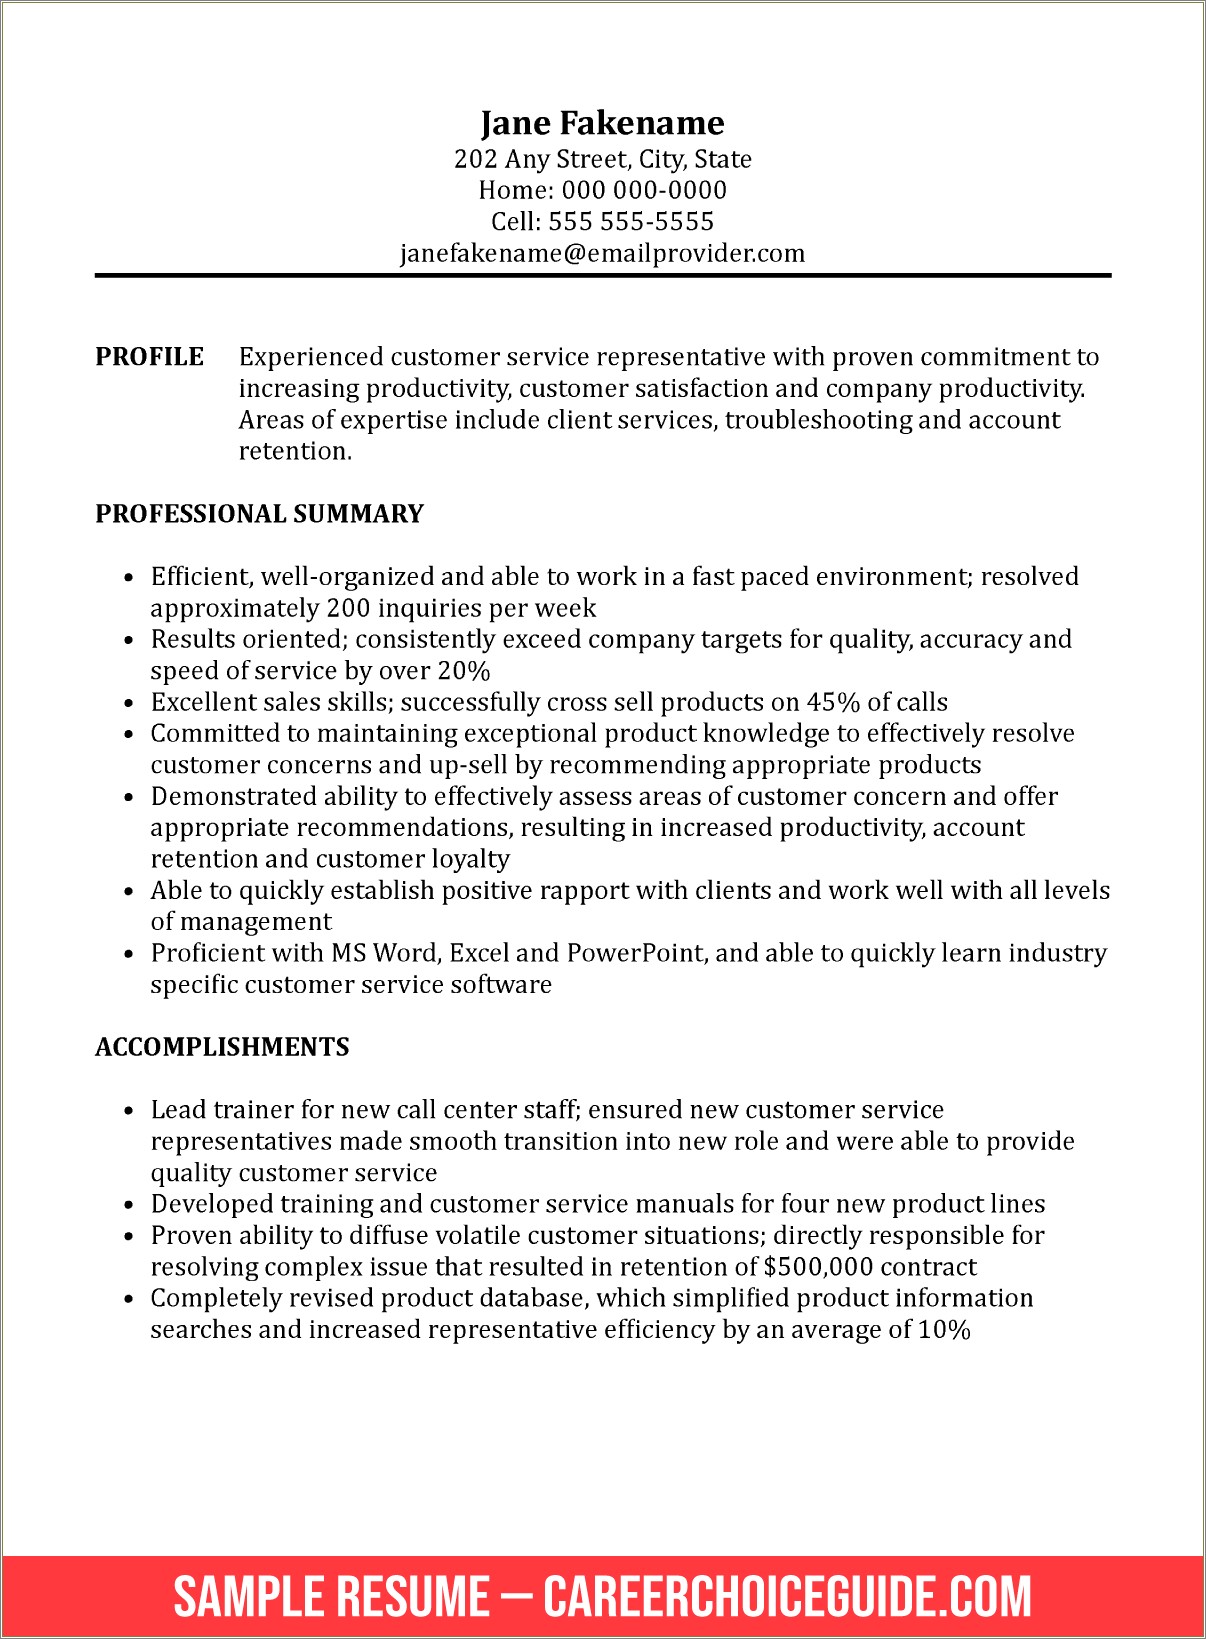 Career Summary For Resume Customer Service